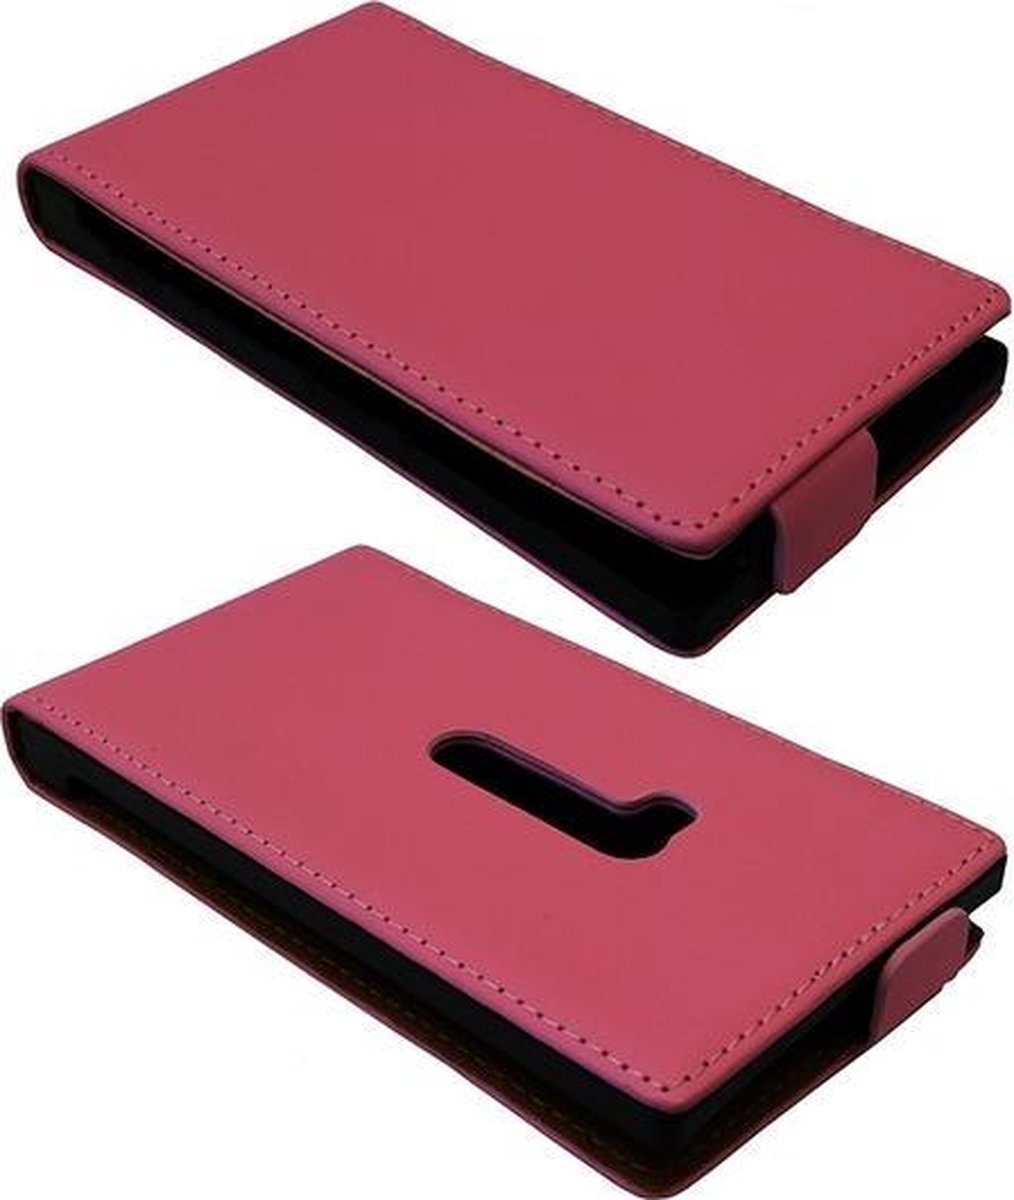 LELYCASE Lederen Flip Case Cover Hoesje Nokia Lumia 920 Roze